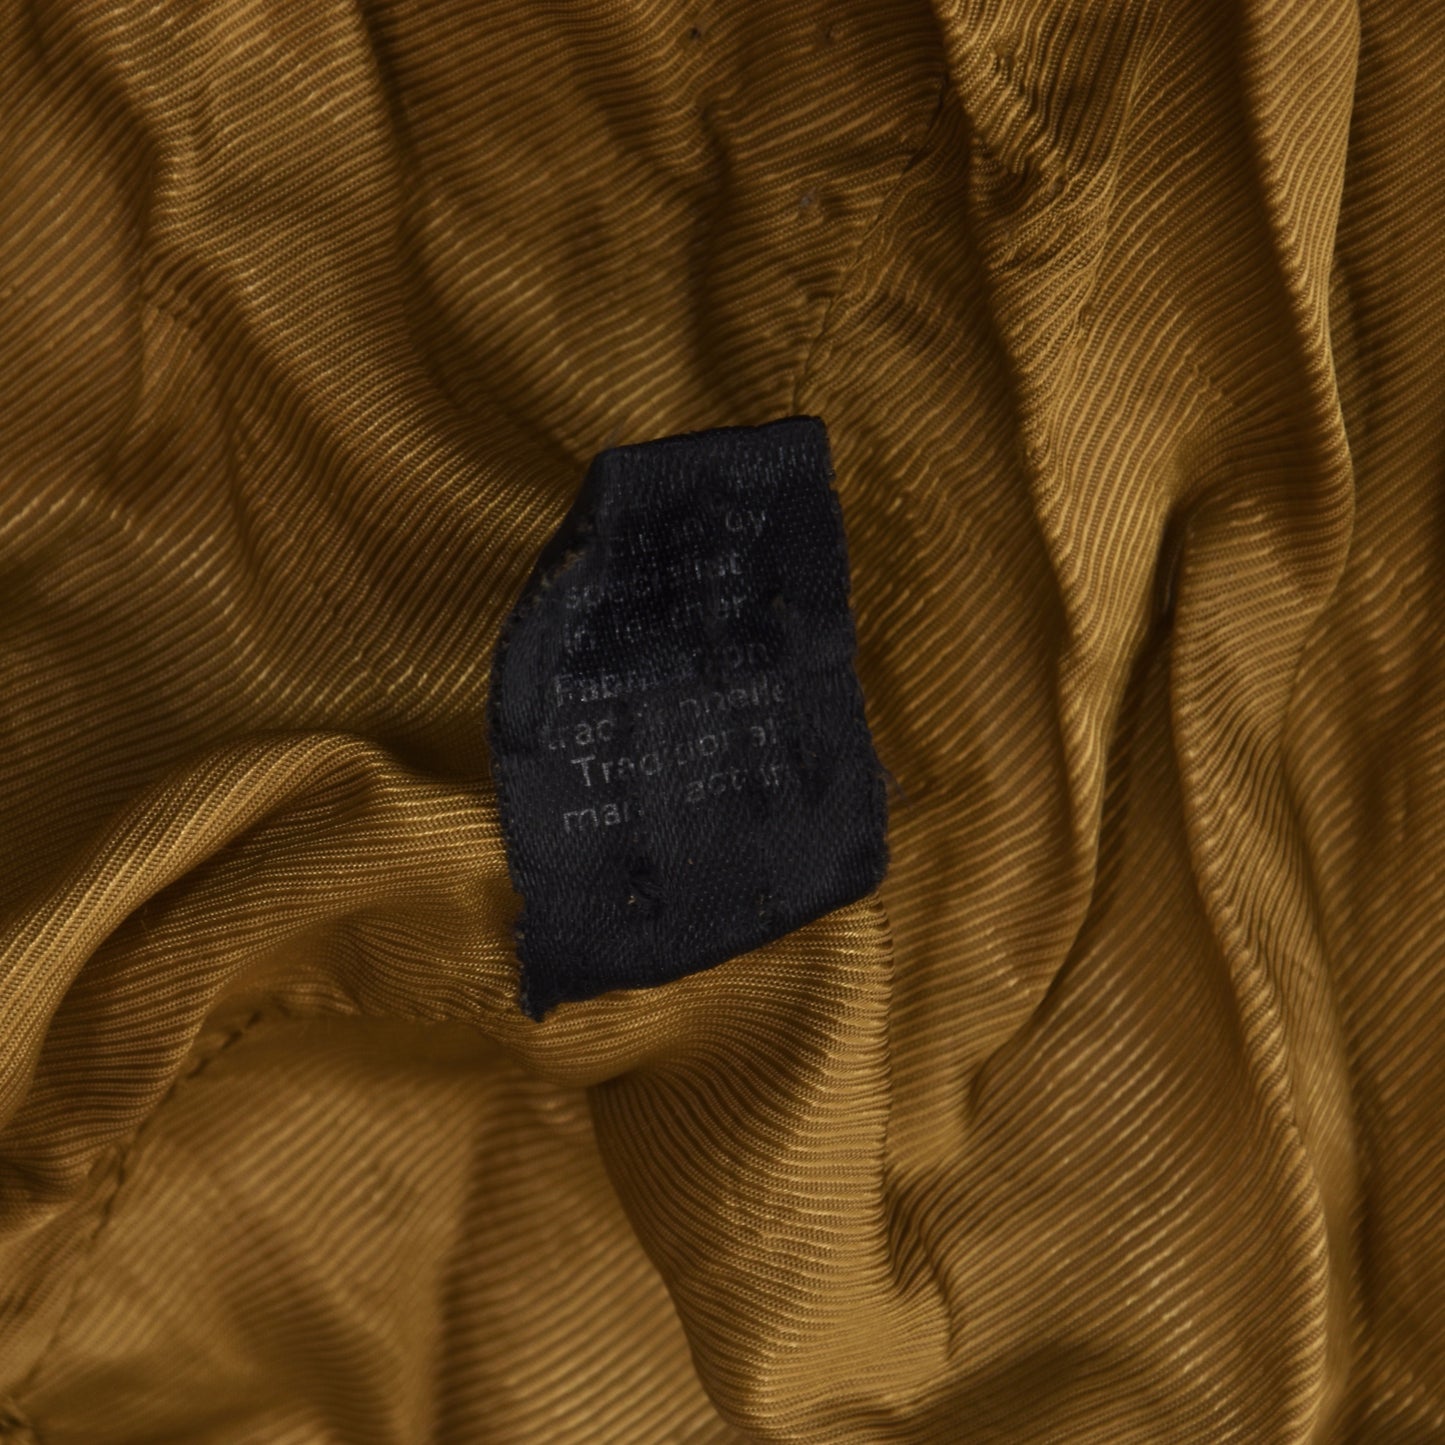 Seraphin Leather Jacket/Blouson Size 54 - Tan